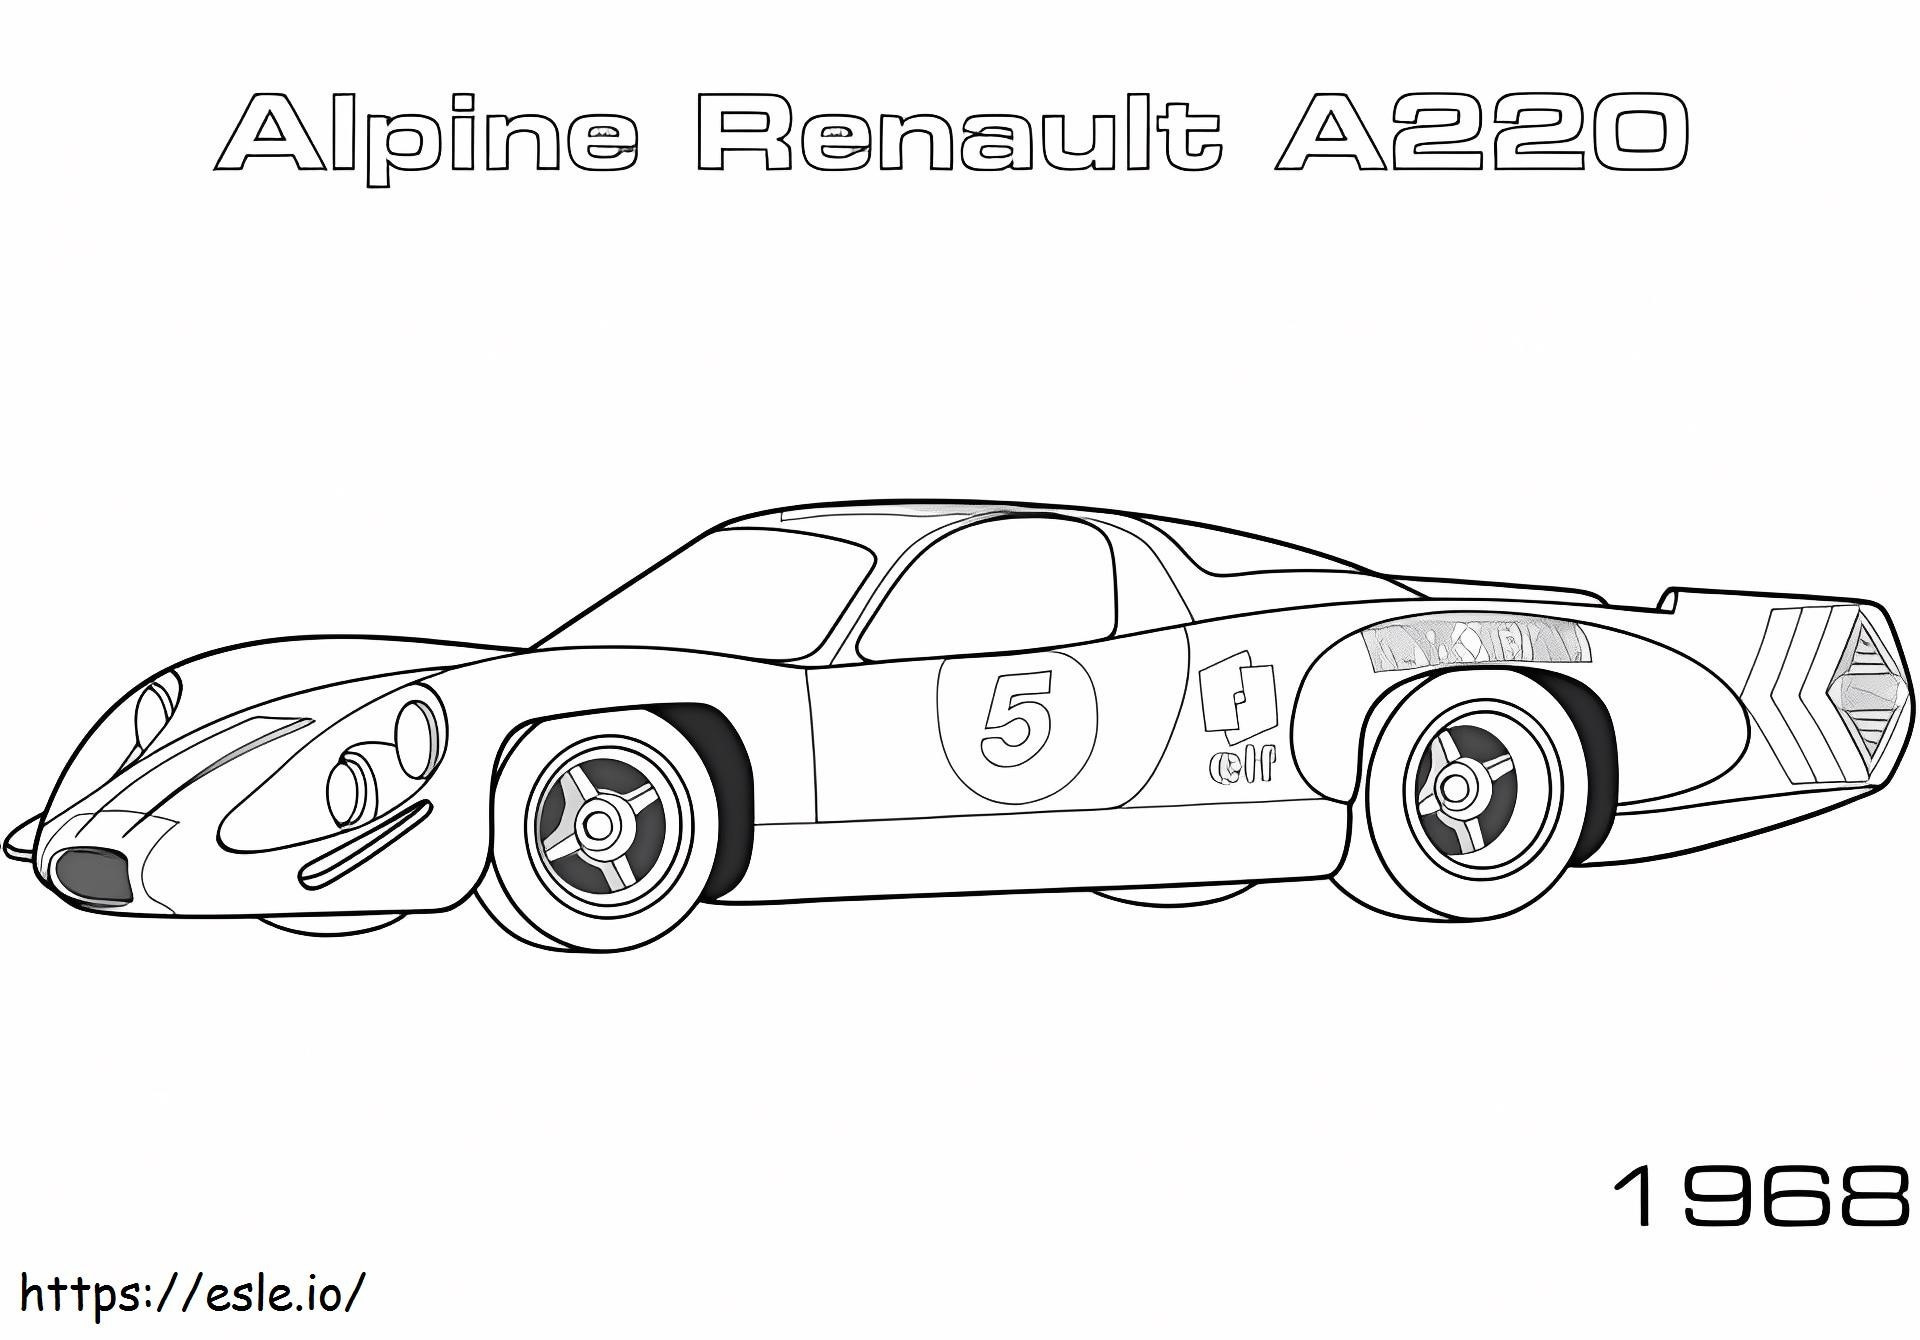 1527235627 1968-as Alpine Renault A220 kifestő